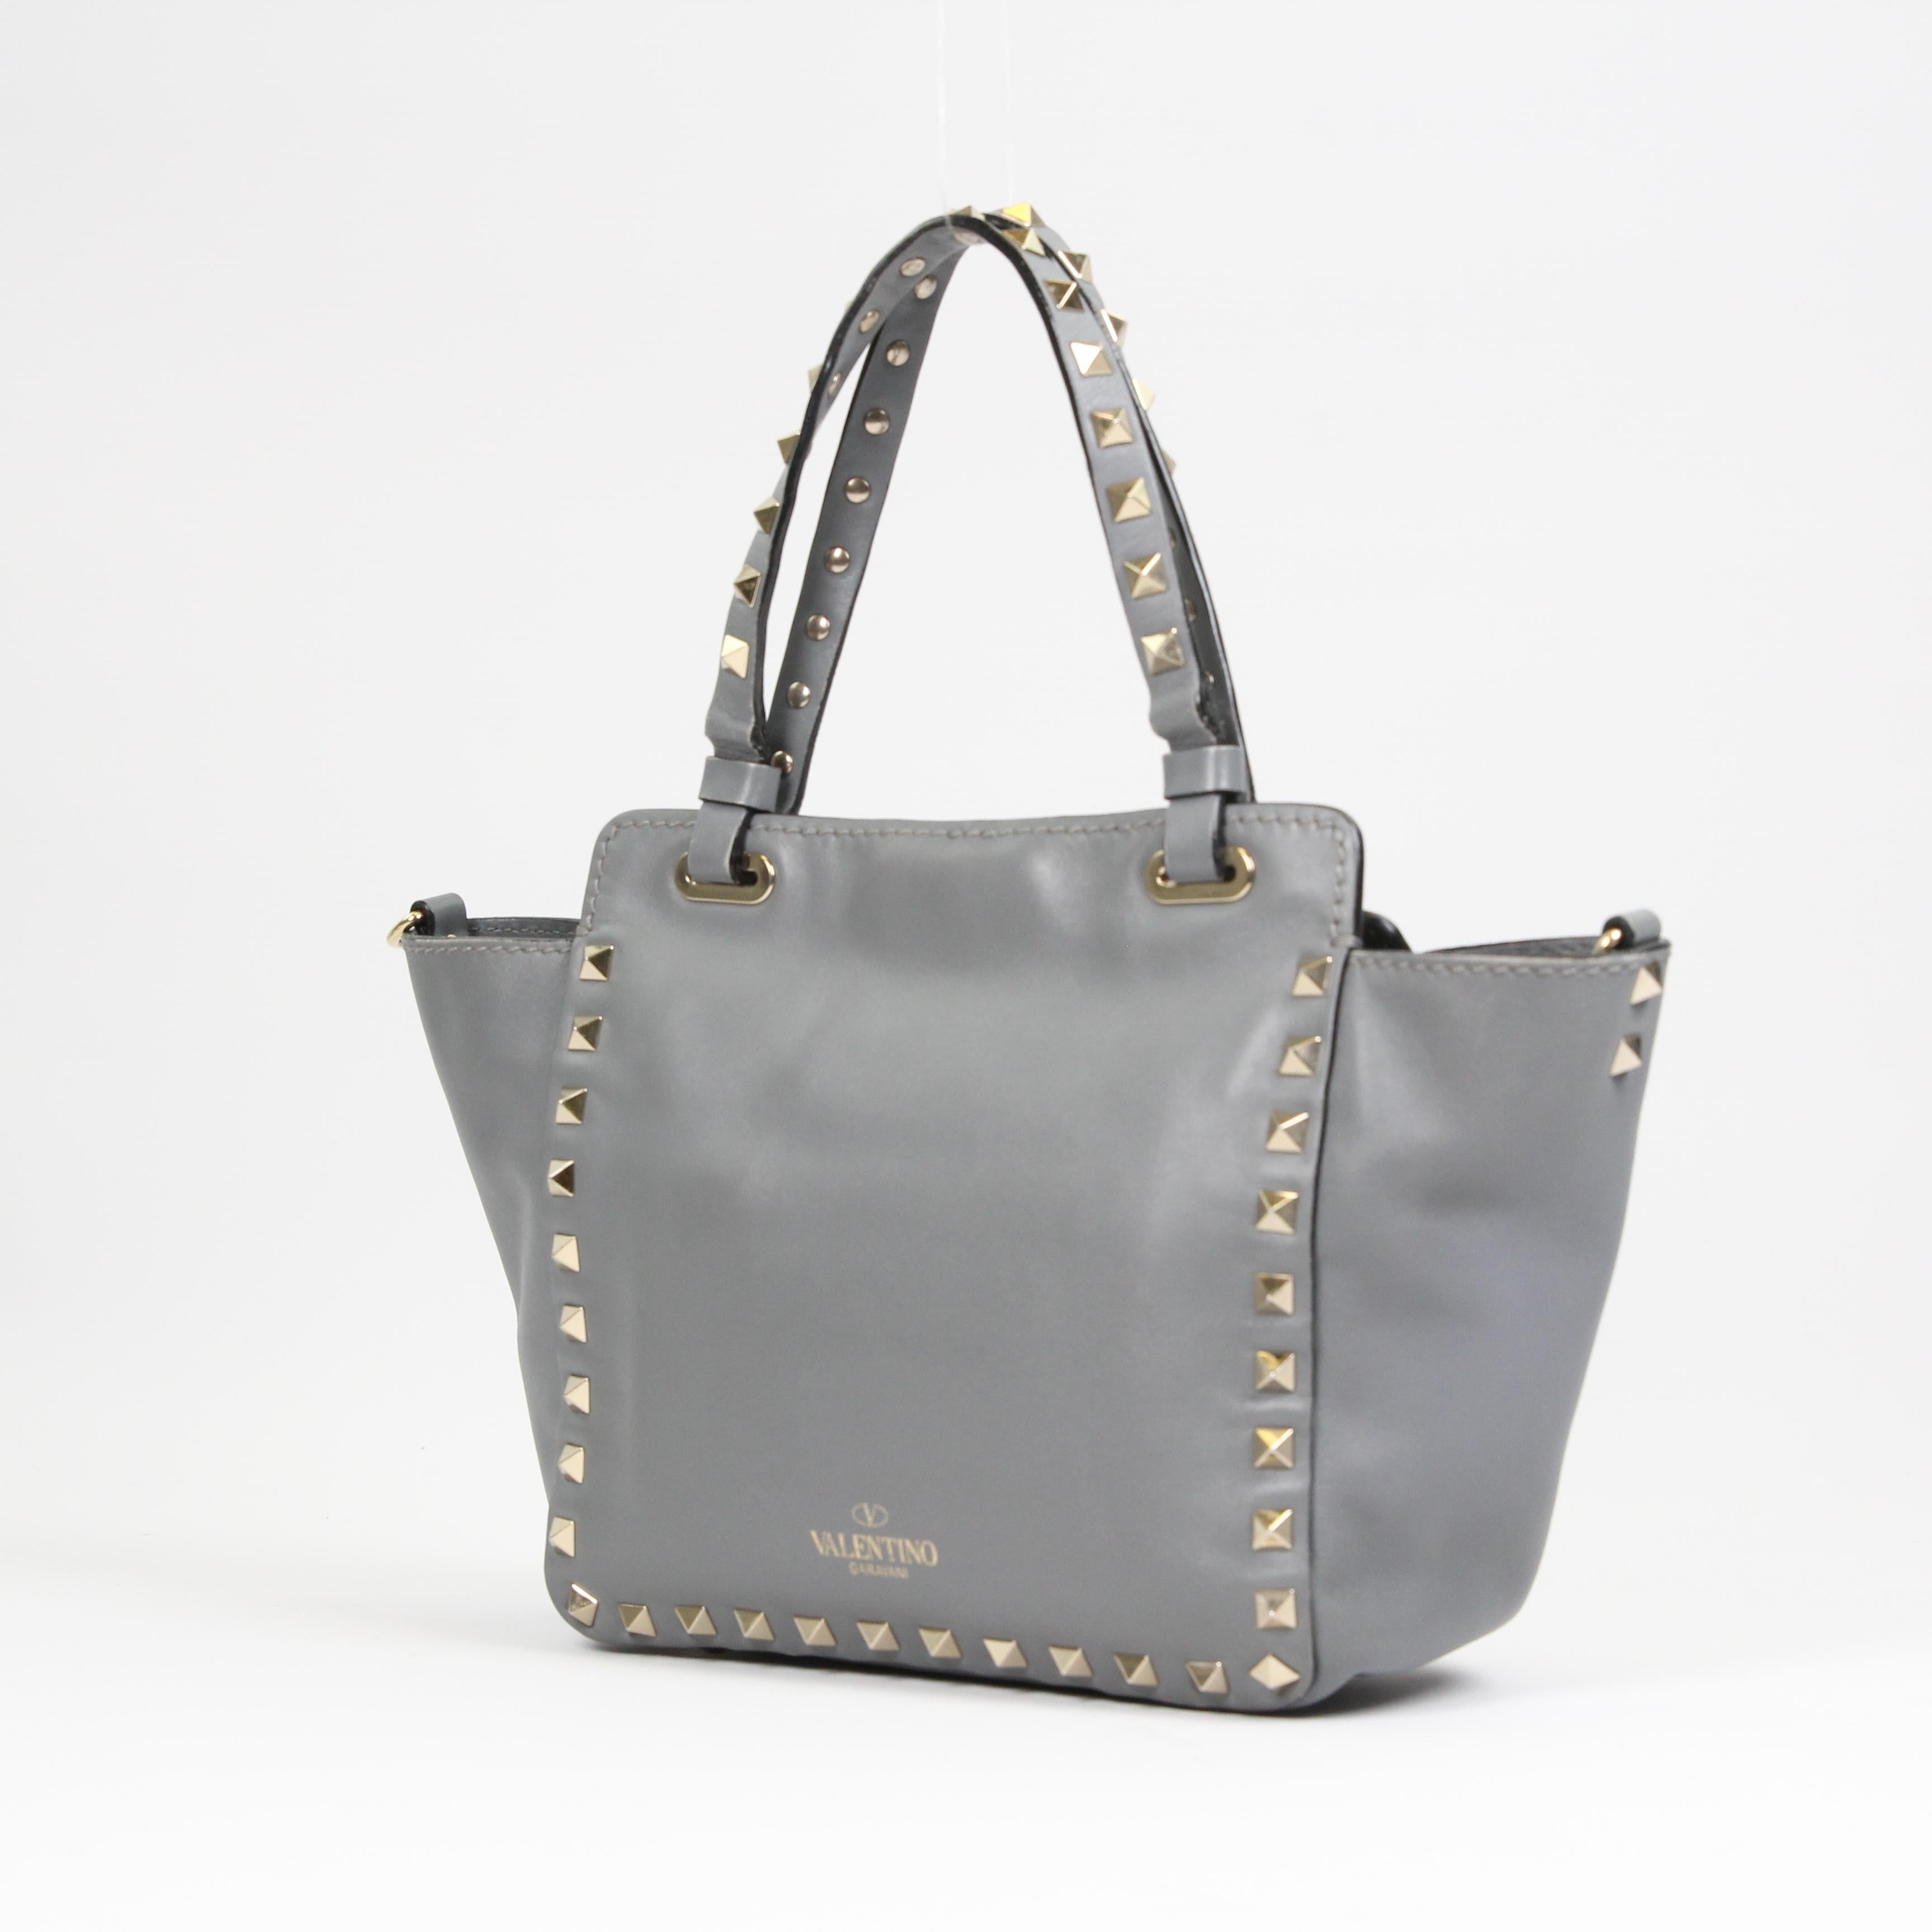 Valentino Garavani Rockstud leather handbag In Excellent Condition For Sale In Rīga, LV